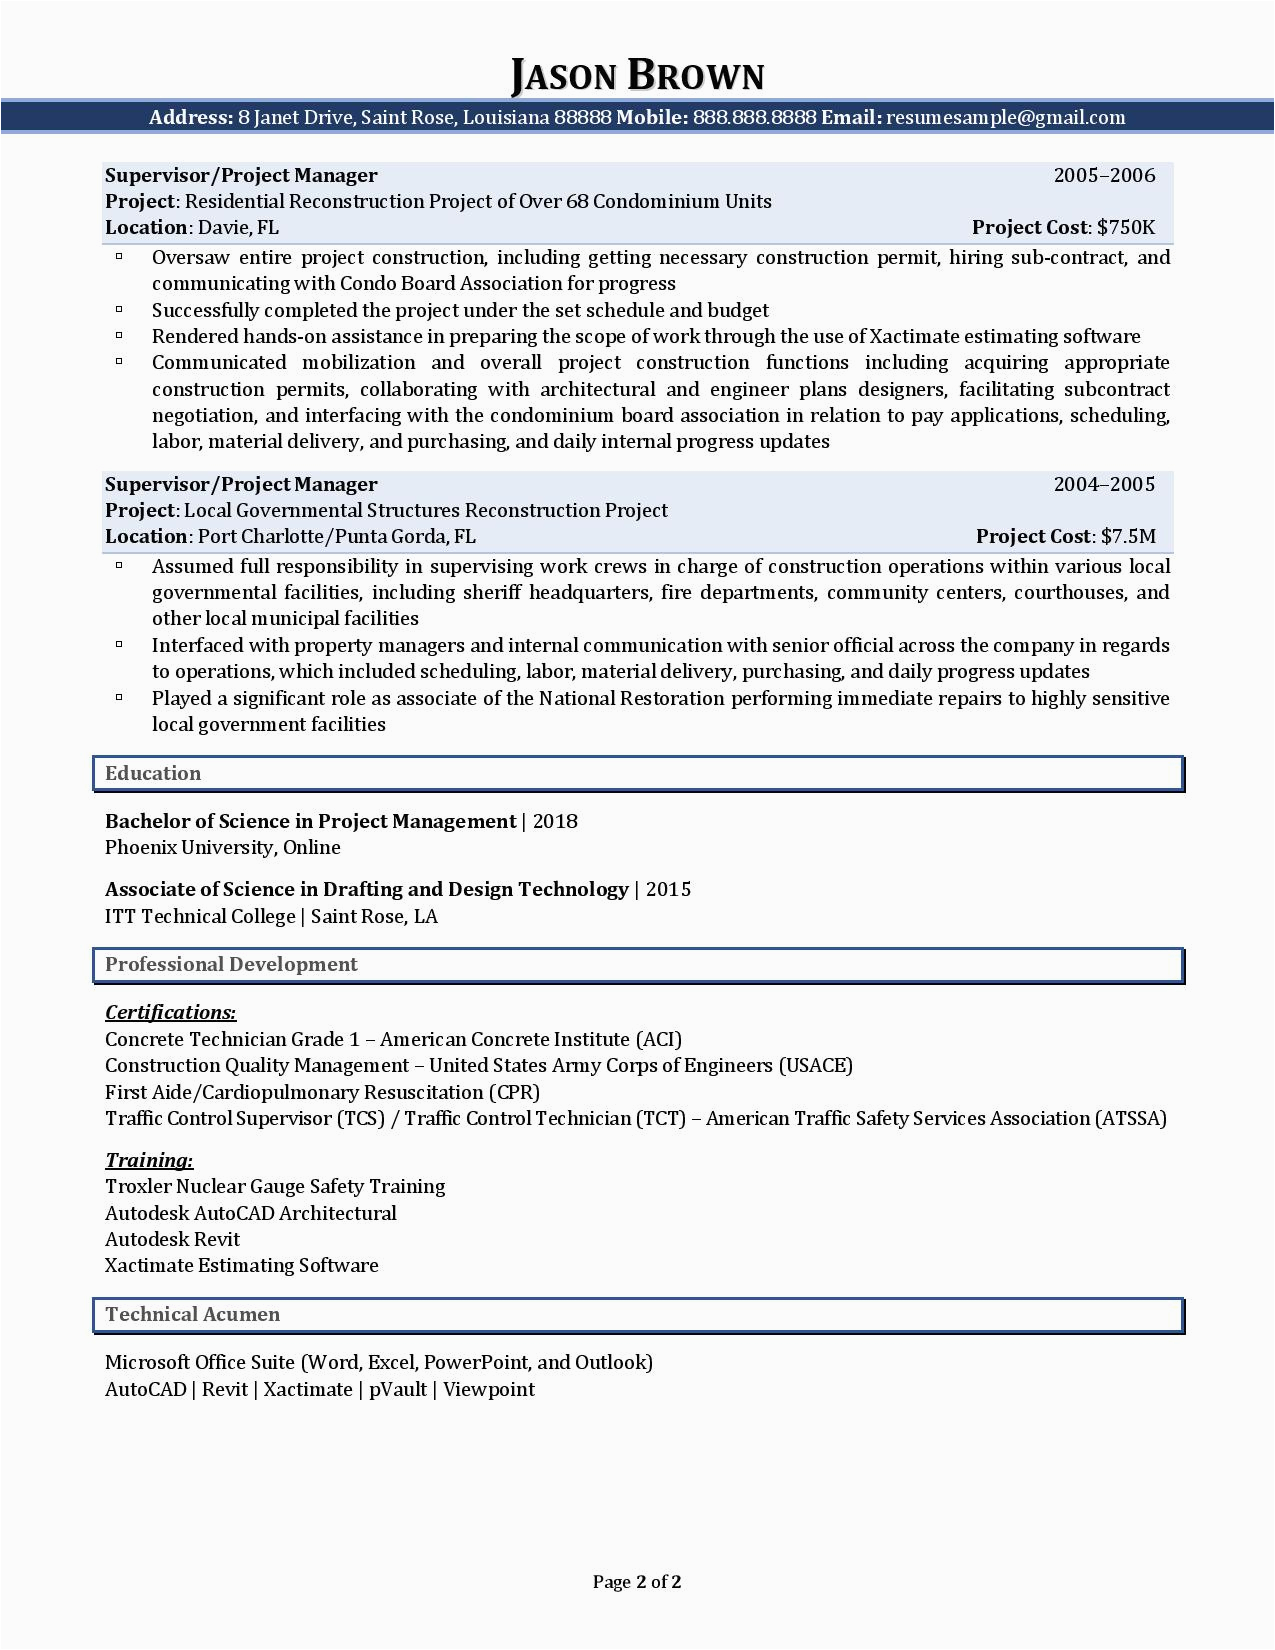 Sample Resume for Professional Civil Engineer Civil Engineer Resume Examples